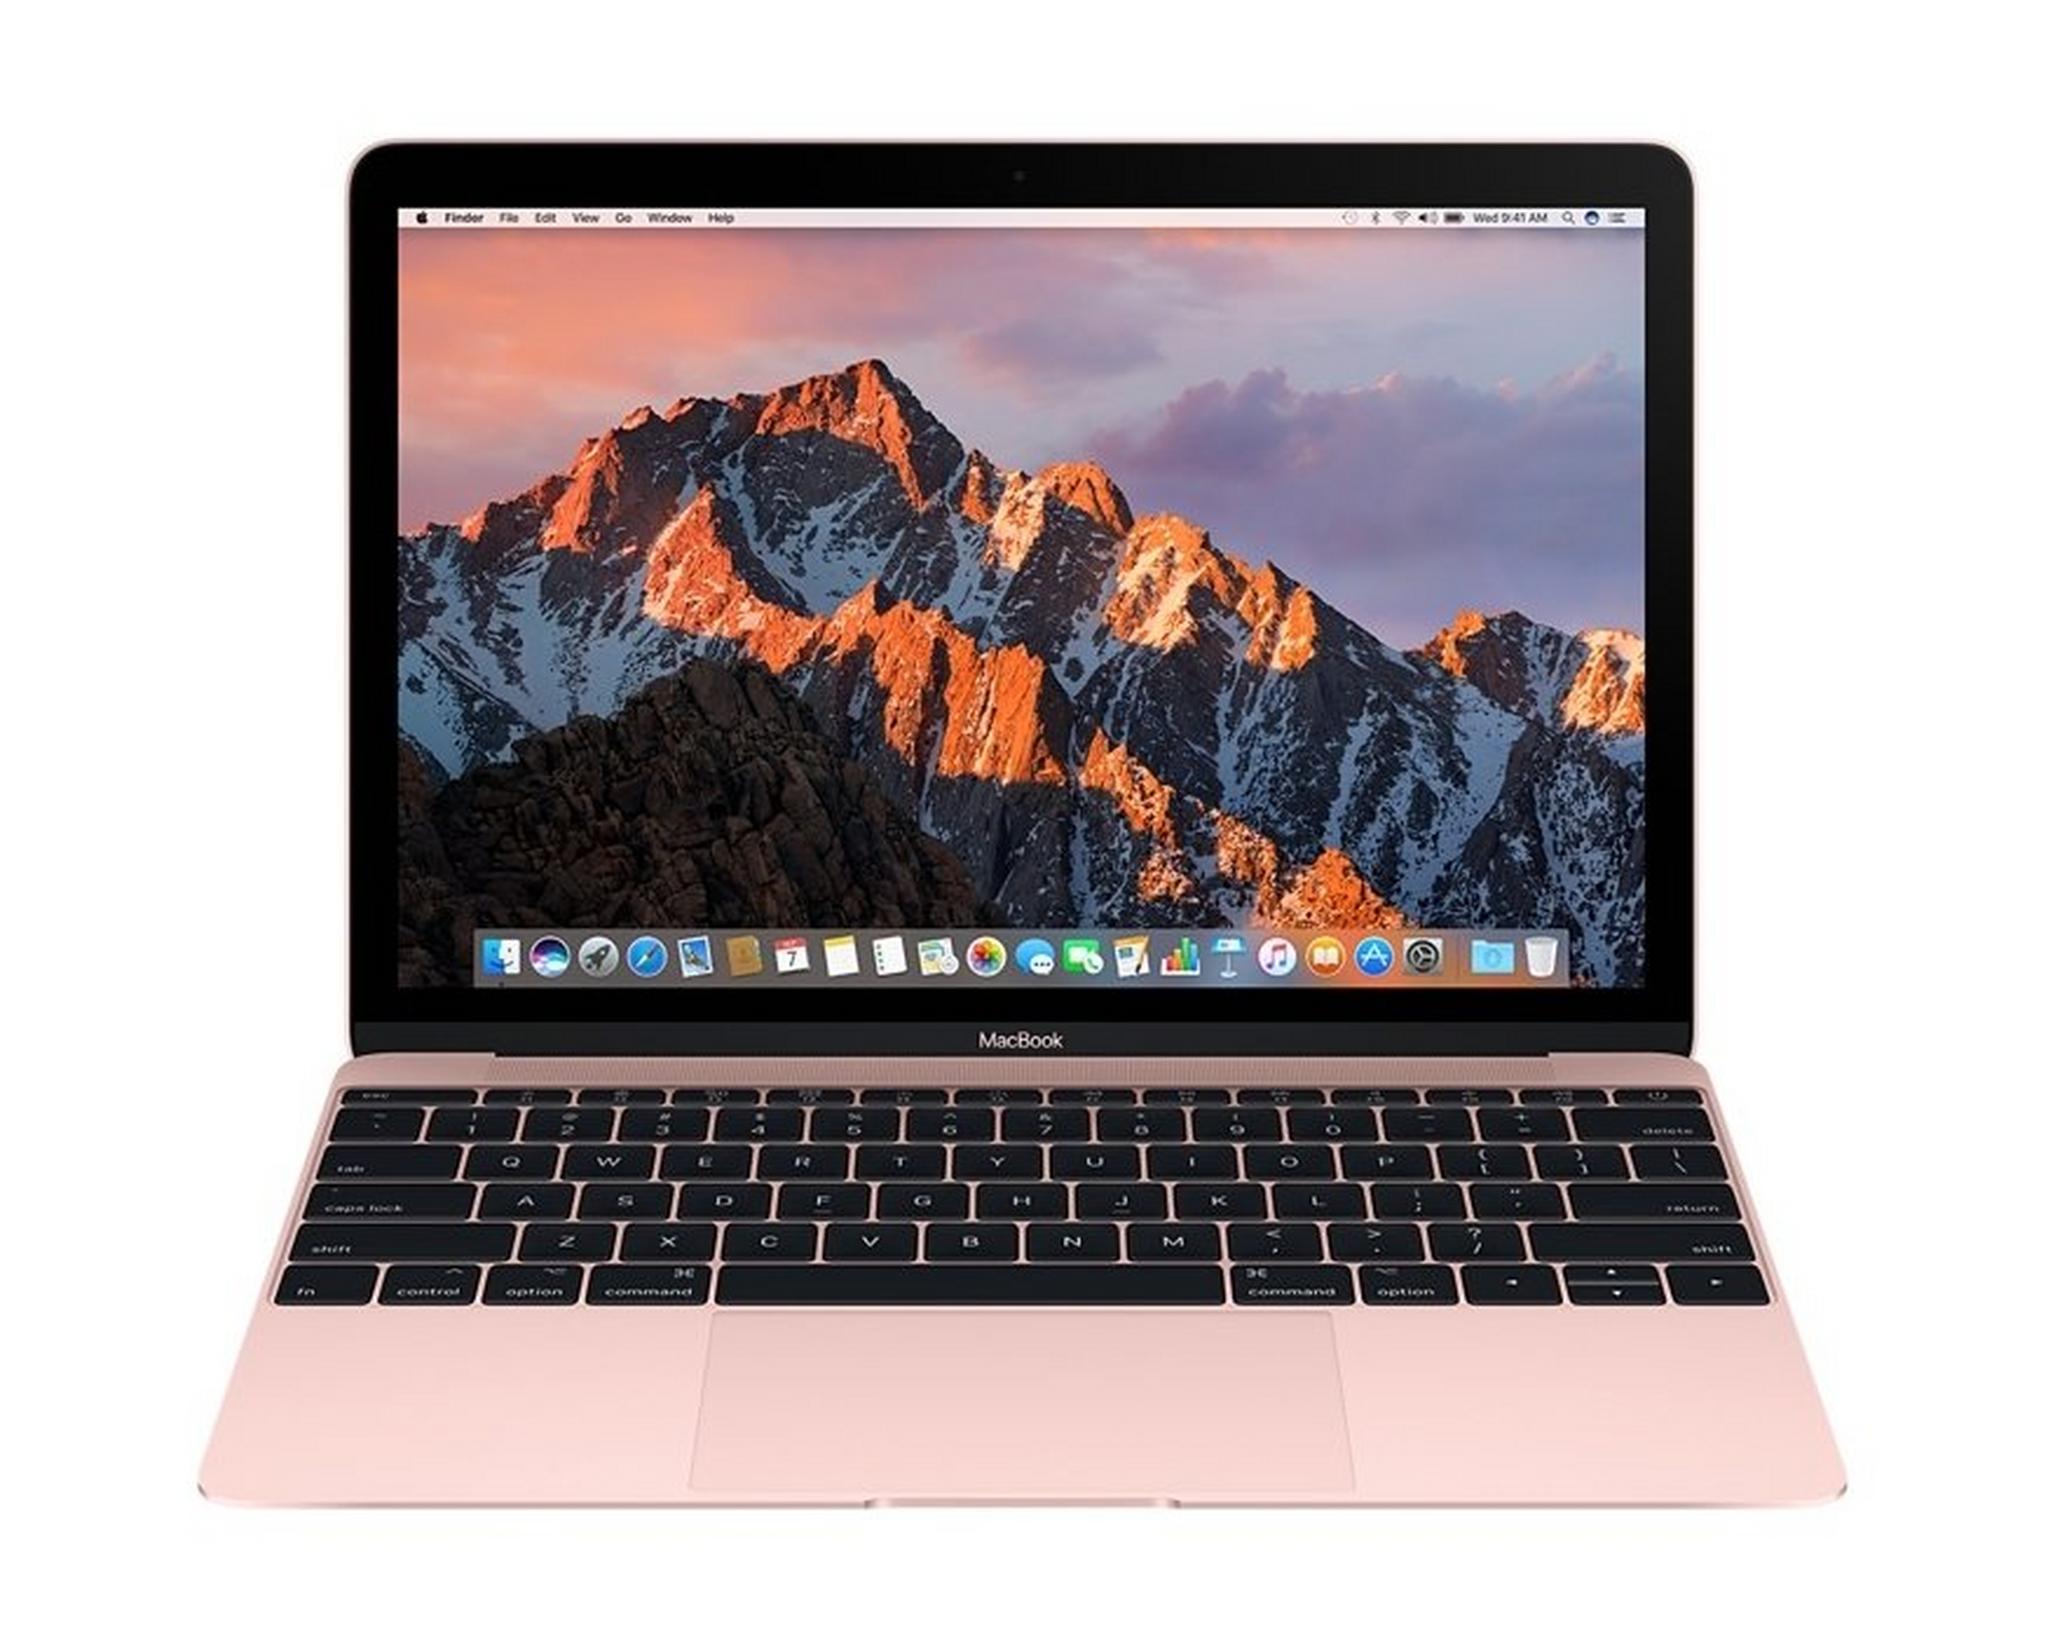 Apple MacBook Core-m3 8GB RAM 256GB SSD 12-inch Laptop (MNYM2AE/A) - Rose Gold